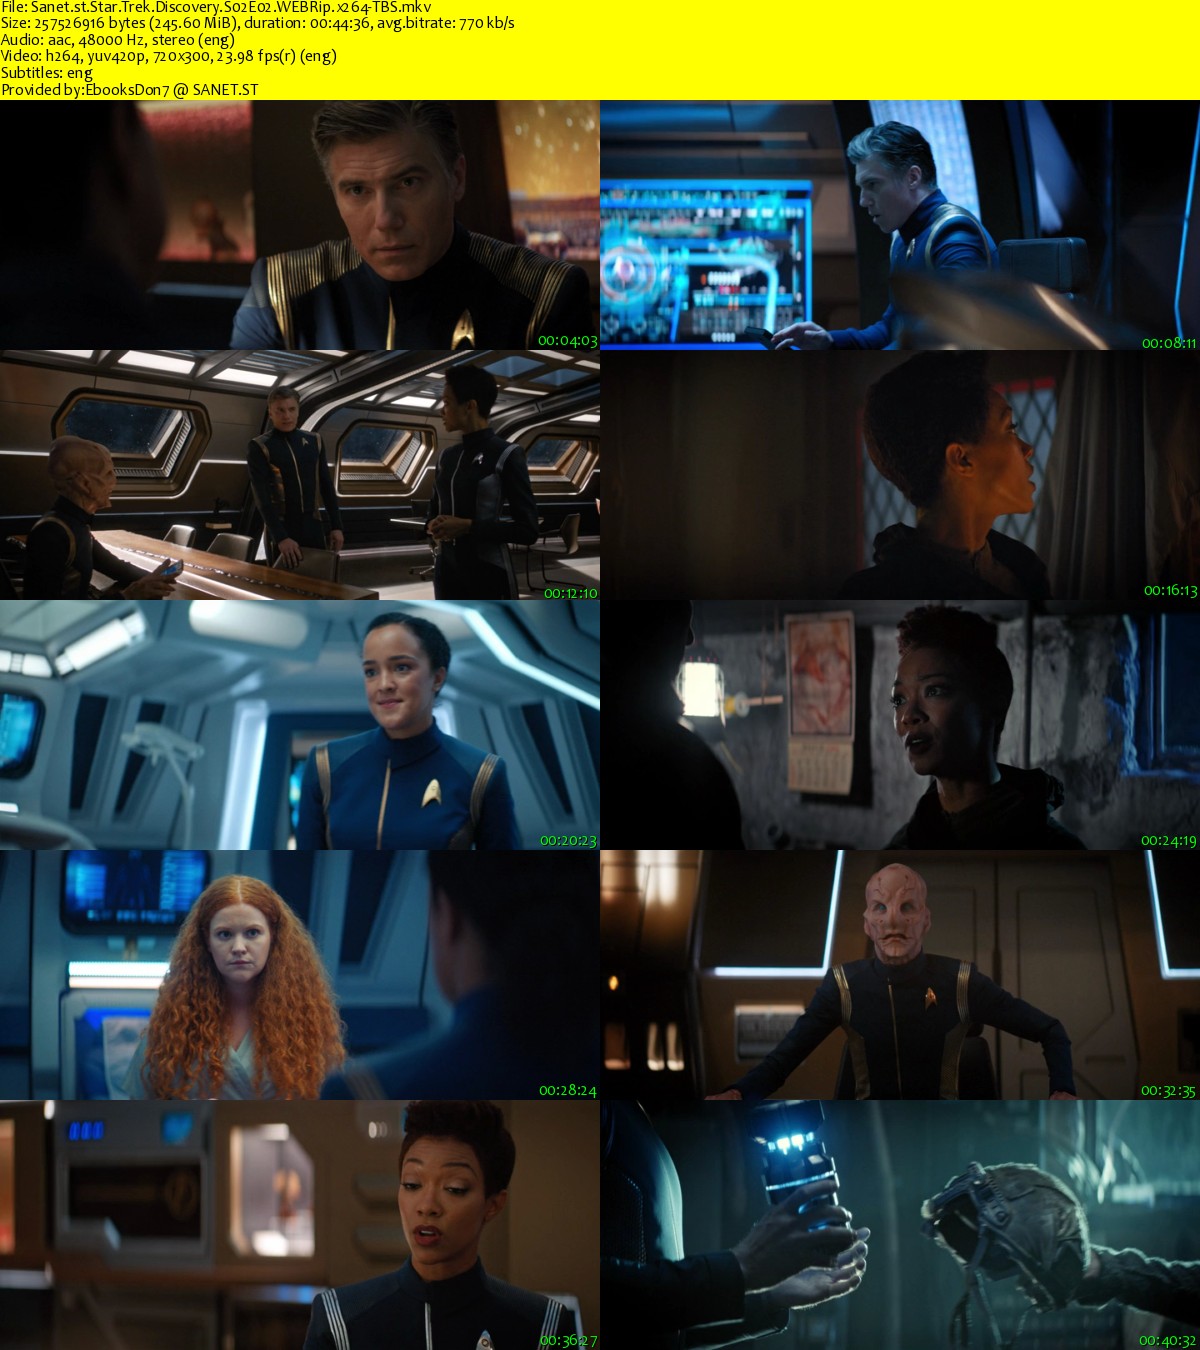 Star Trek Discovery S02E02 WEBRip x264-TBS.